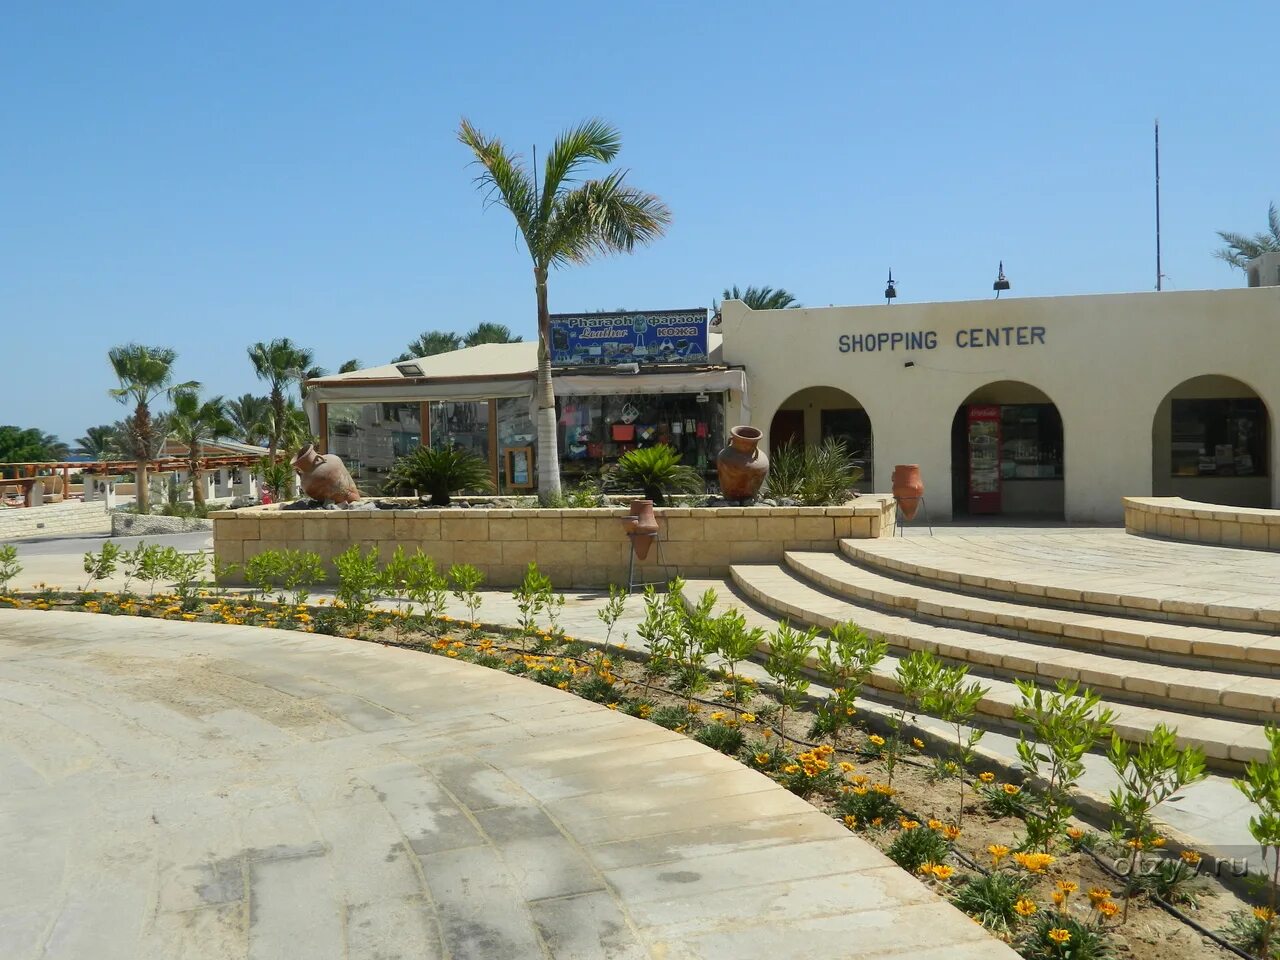 Coral beach rotana. Coral Beach Hotel Hurghada Египет Хургада. Отель Корал Бич ротана Резорт Египет Хургада. Coral Beach Rotana Resort 4 Египет Хургада. Ротана Хургада отель Корал Бич.